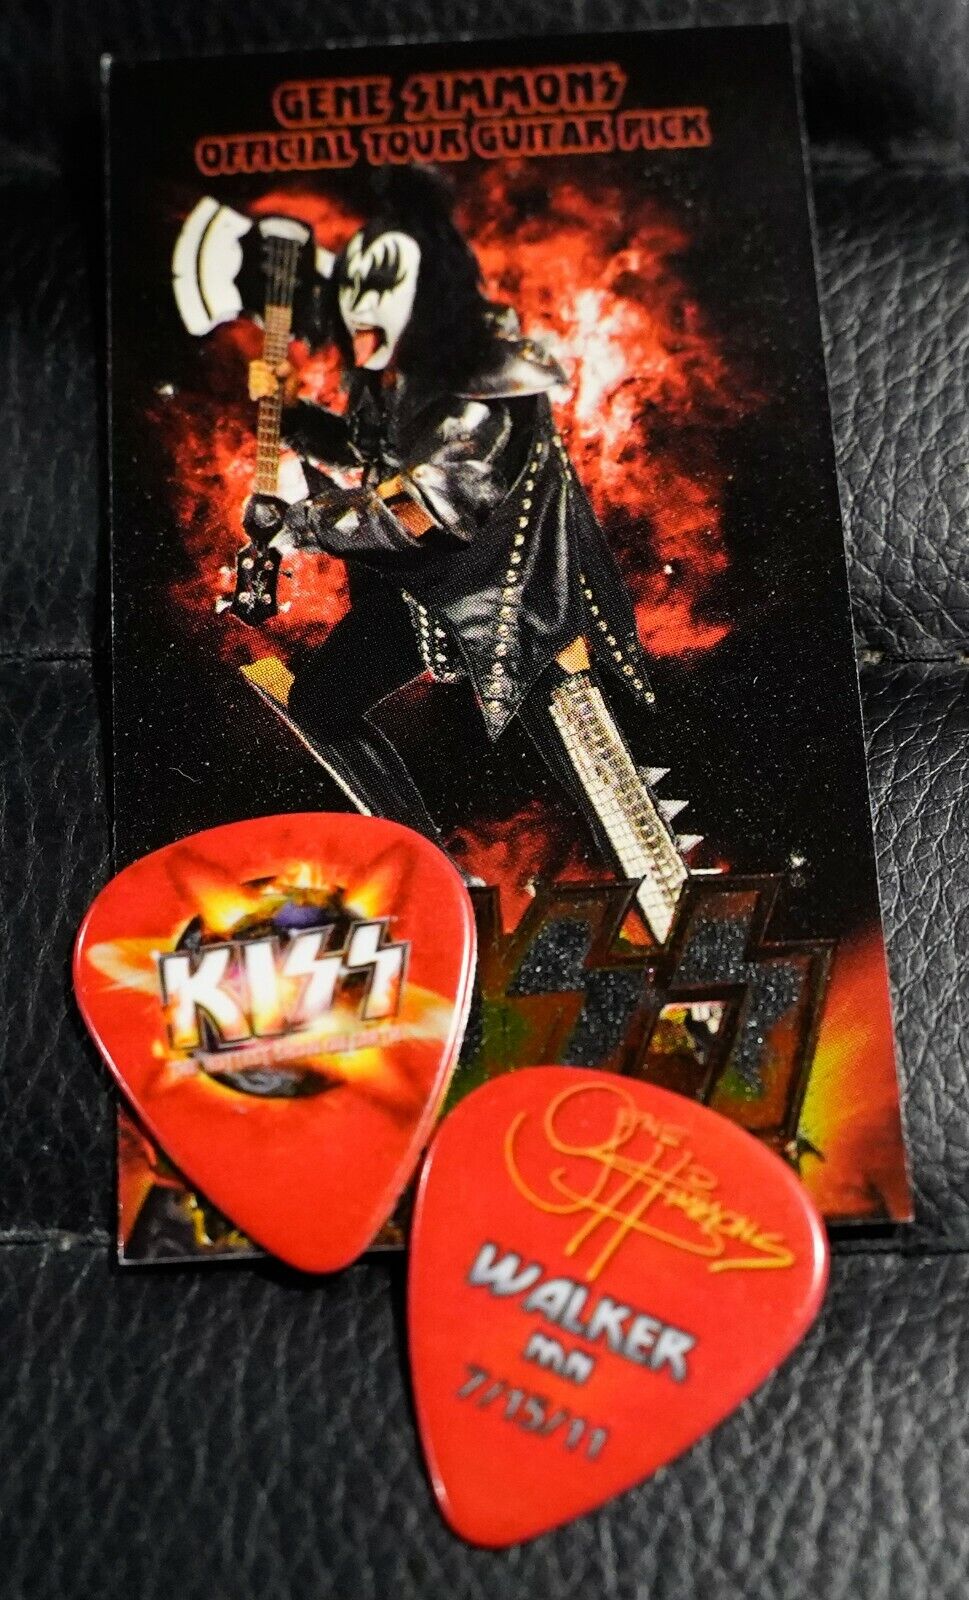 Kiss 071511 Walker Gene Simmons Guitar Pick Hottest Show On Earth Tour